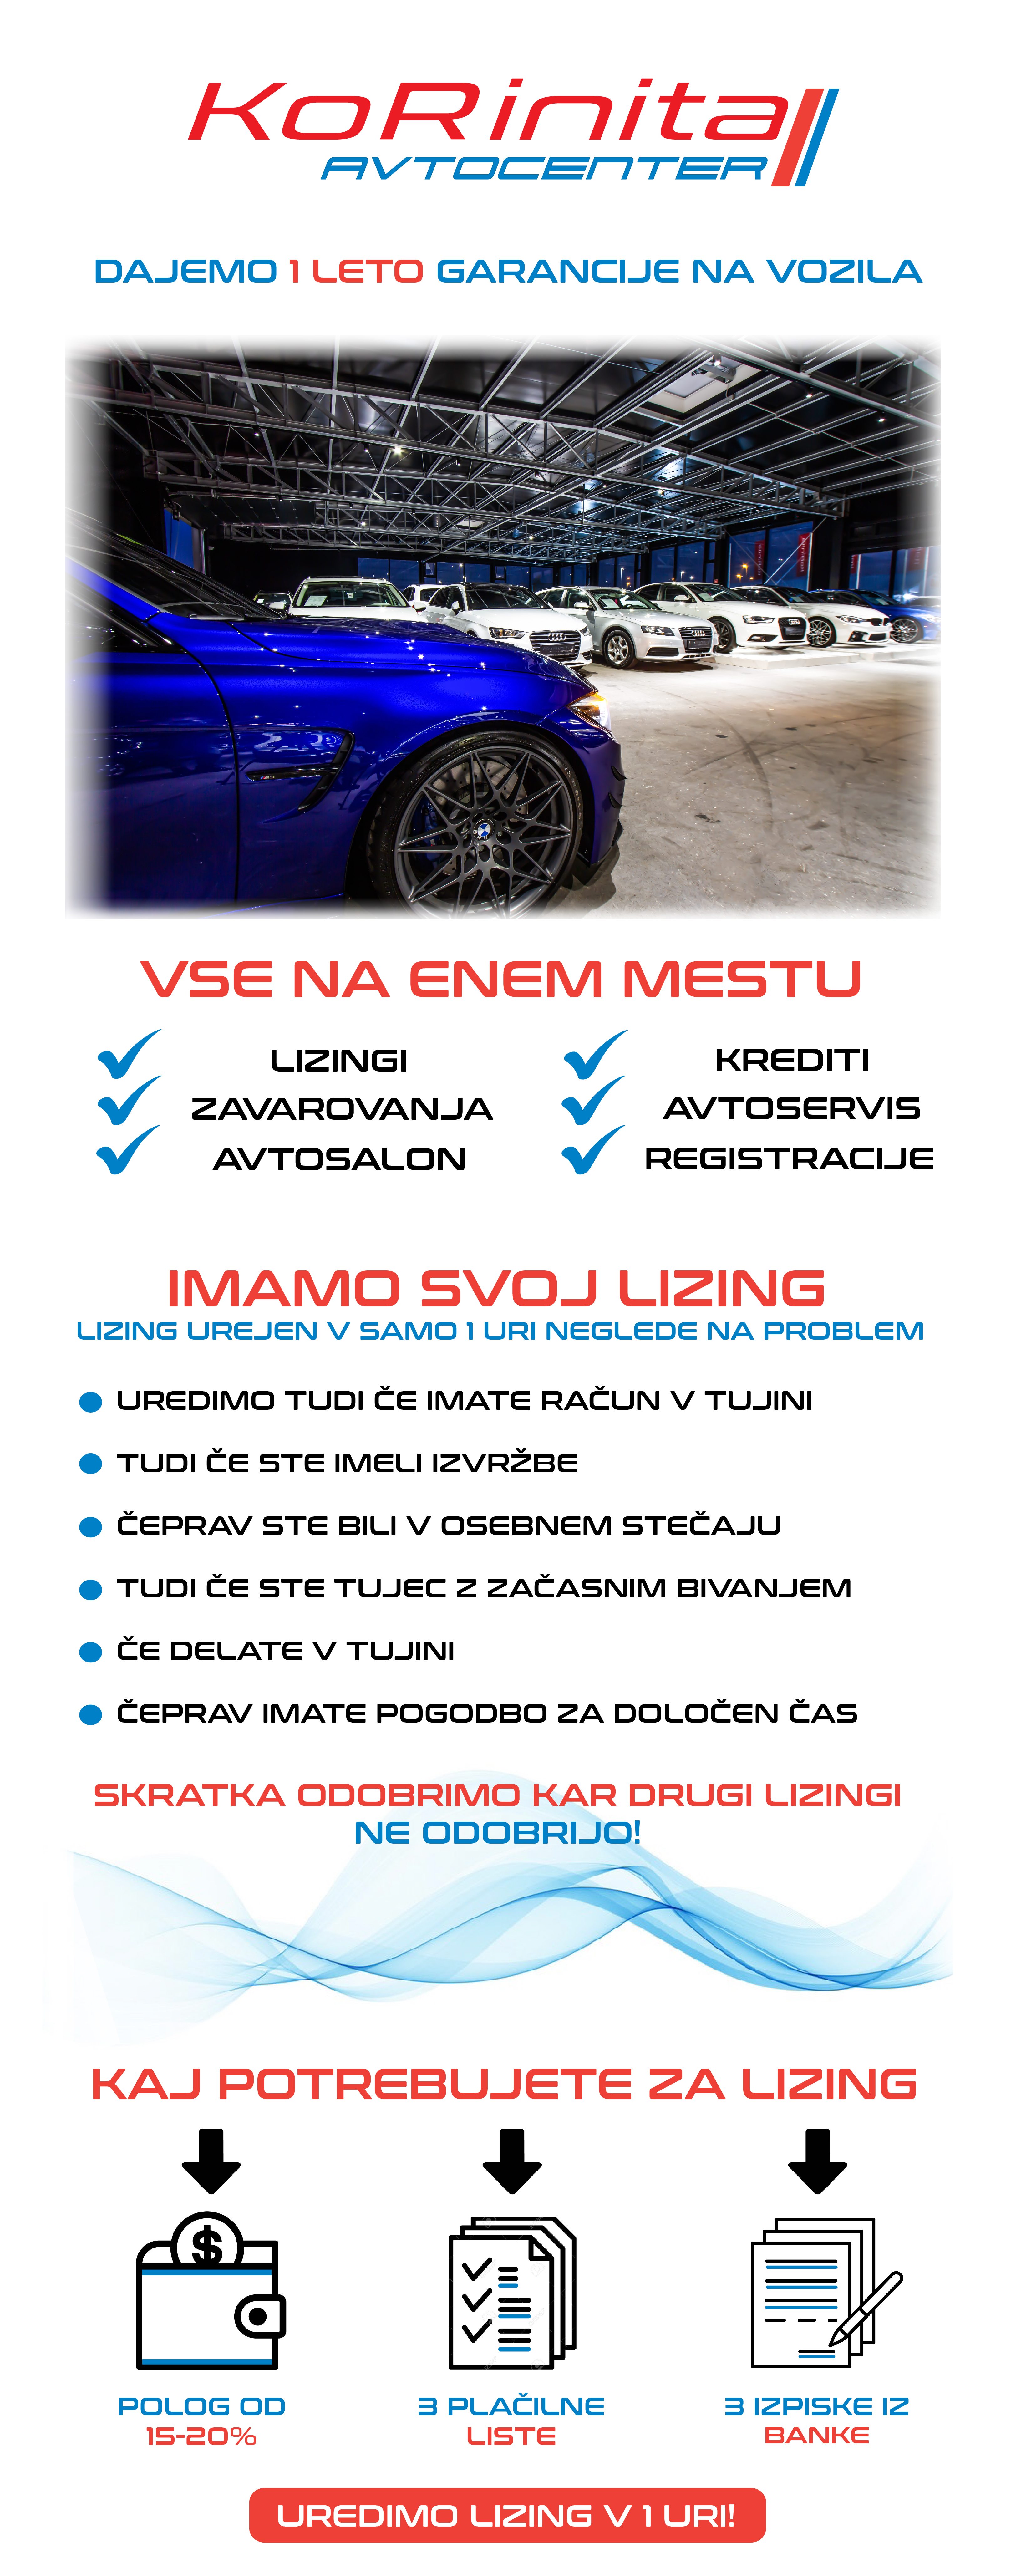 BMW serija 5 Touring: 530xdrive M-paket AUT. , letnik:2005,0 EUR :: Avtonet  ::